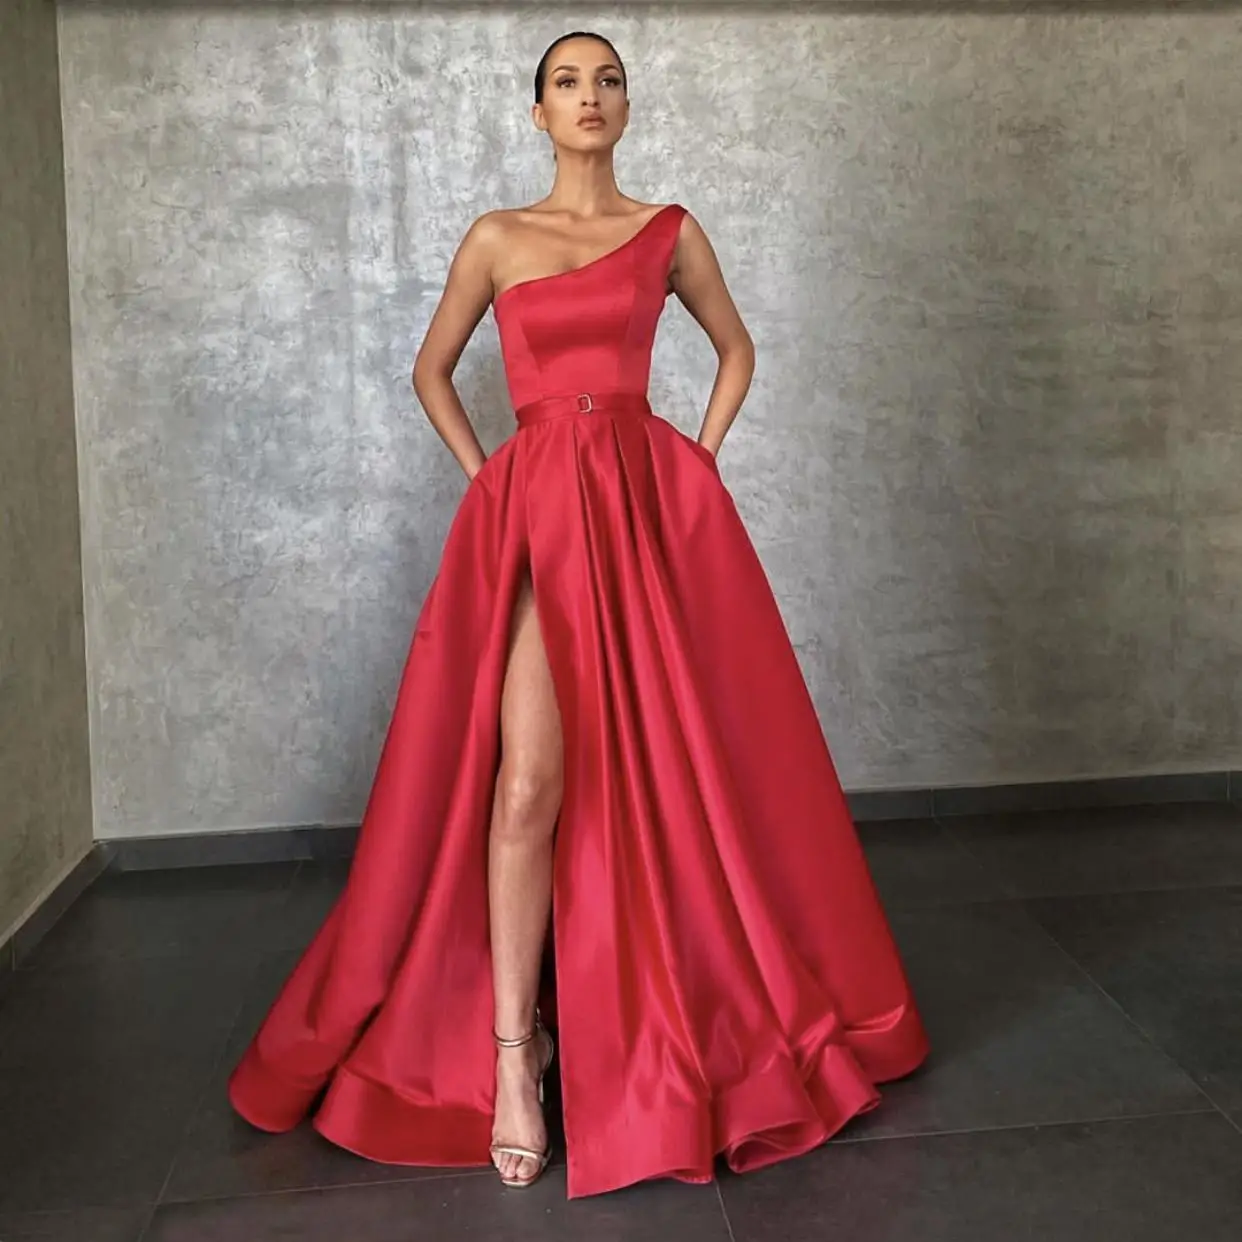 Red Evening Dresses 2022 With Dubai Middle East High Split Formal Gowns Party Prom Dress Sash Vestidos De Festa Red Carpet plus size prom dresses Prom Dresses